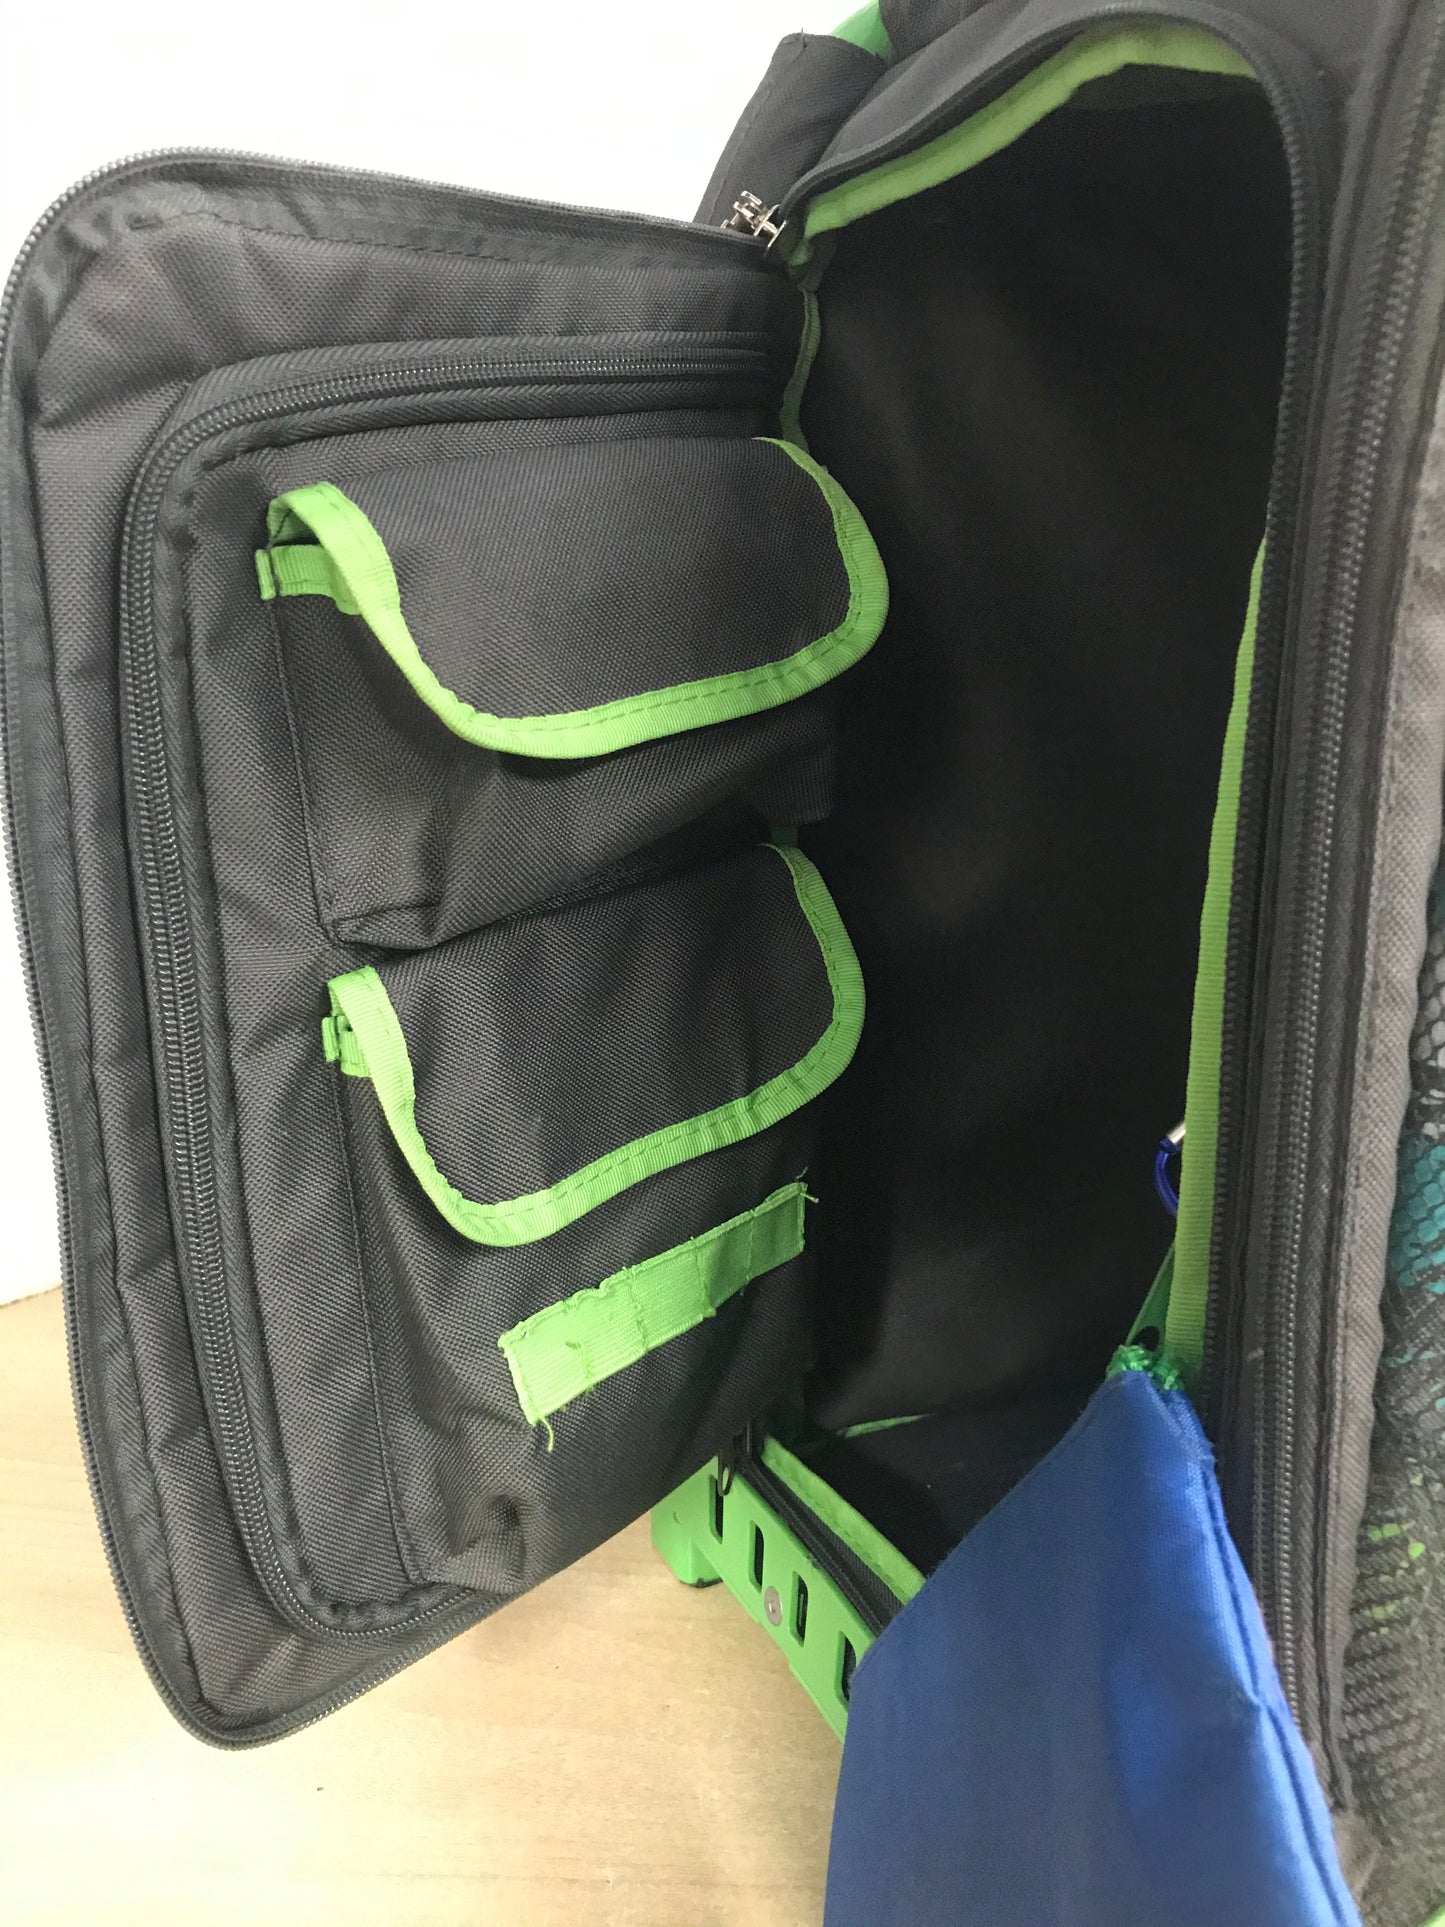 Zuka 20 inch Sports Insert Travel Carry On School Bag Double Wheels Steel Frame Outstanding Quality Minor Wear